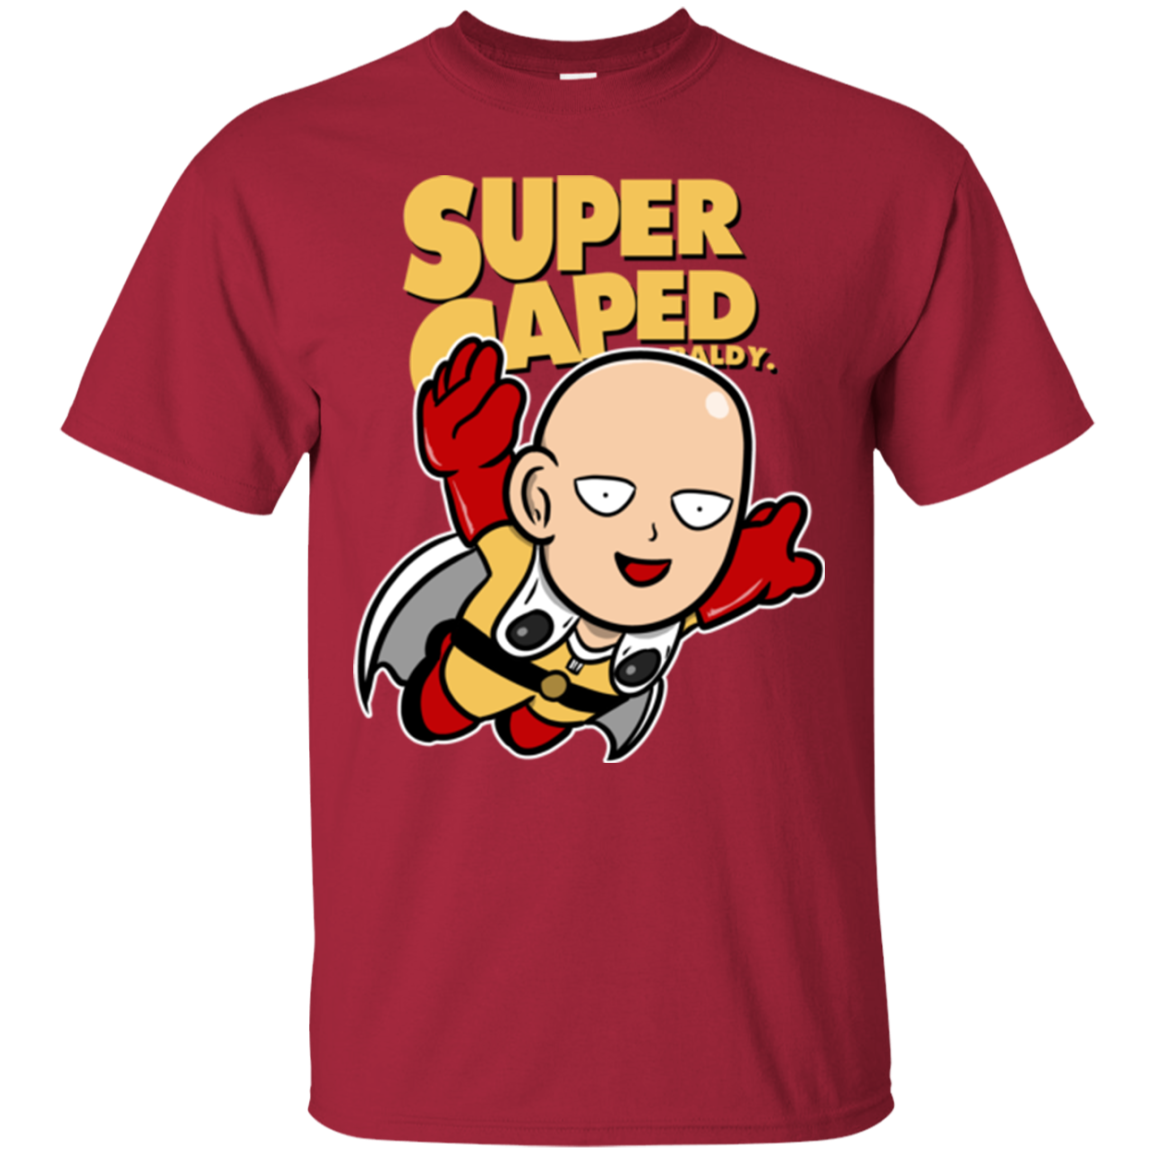 Super Caped Baldy (1) T-Shirt